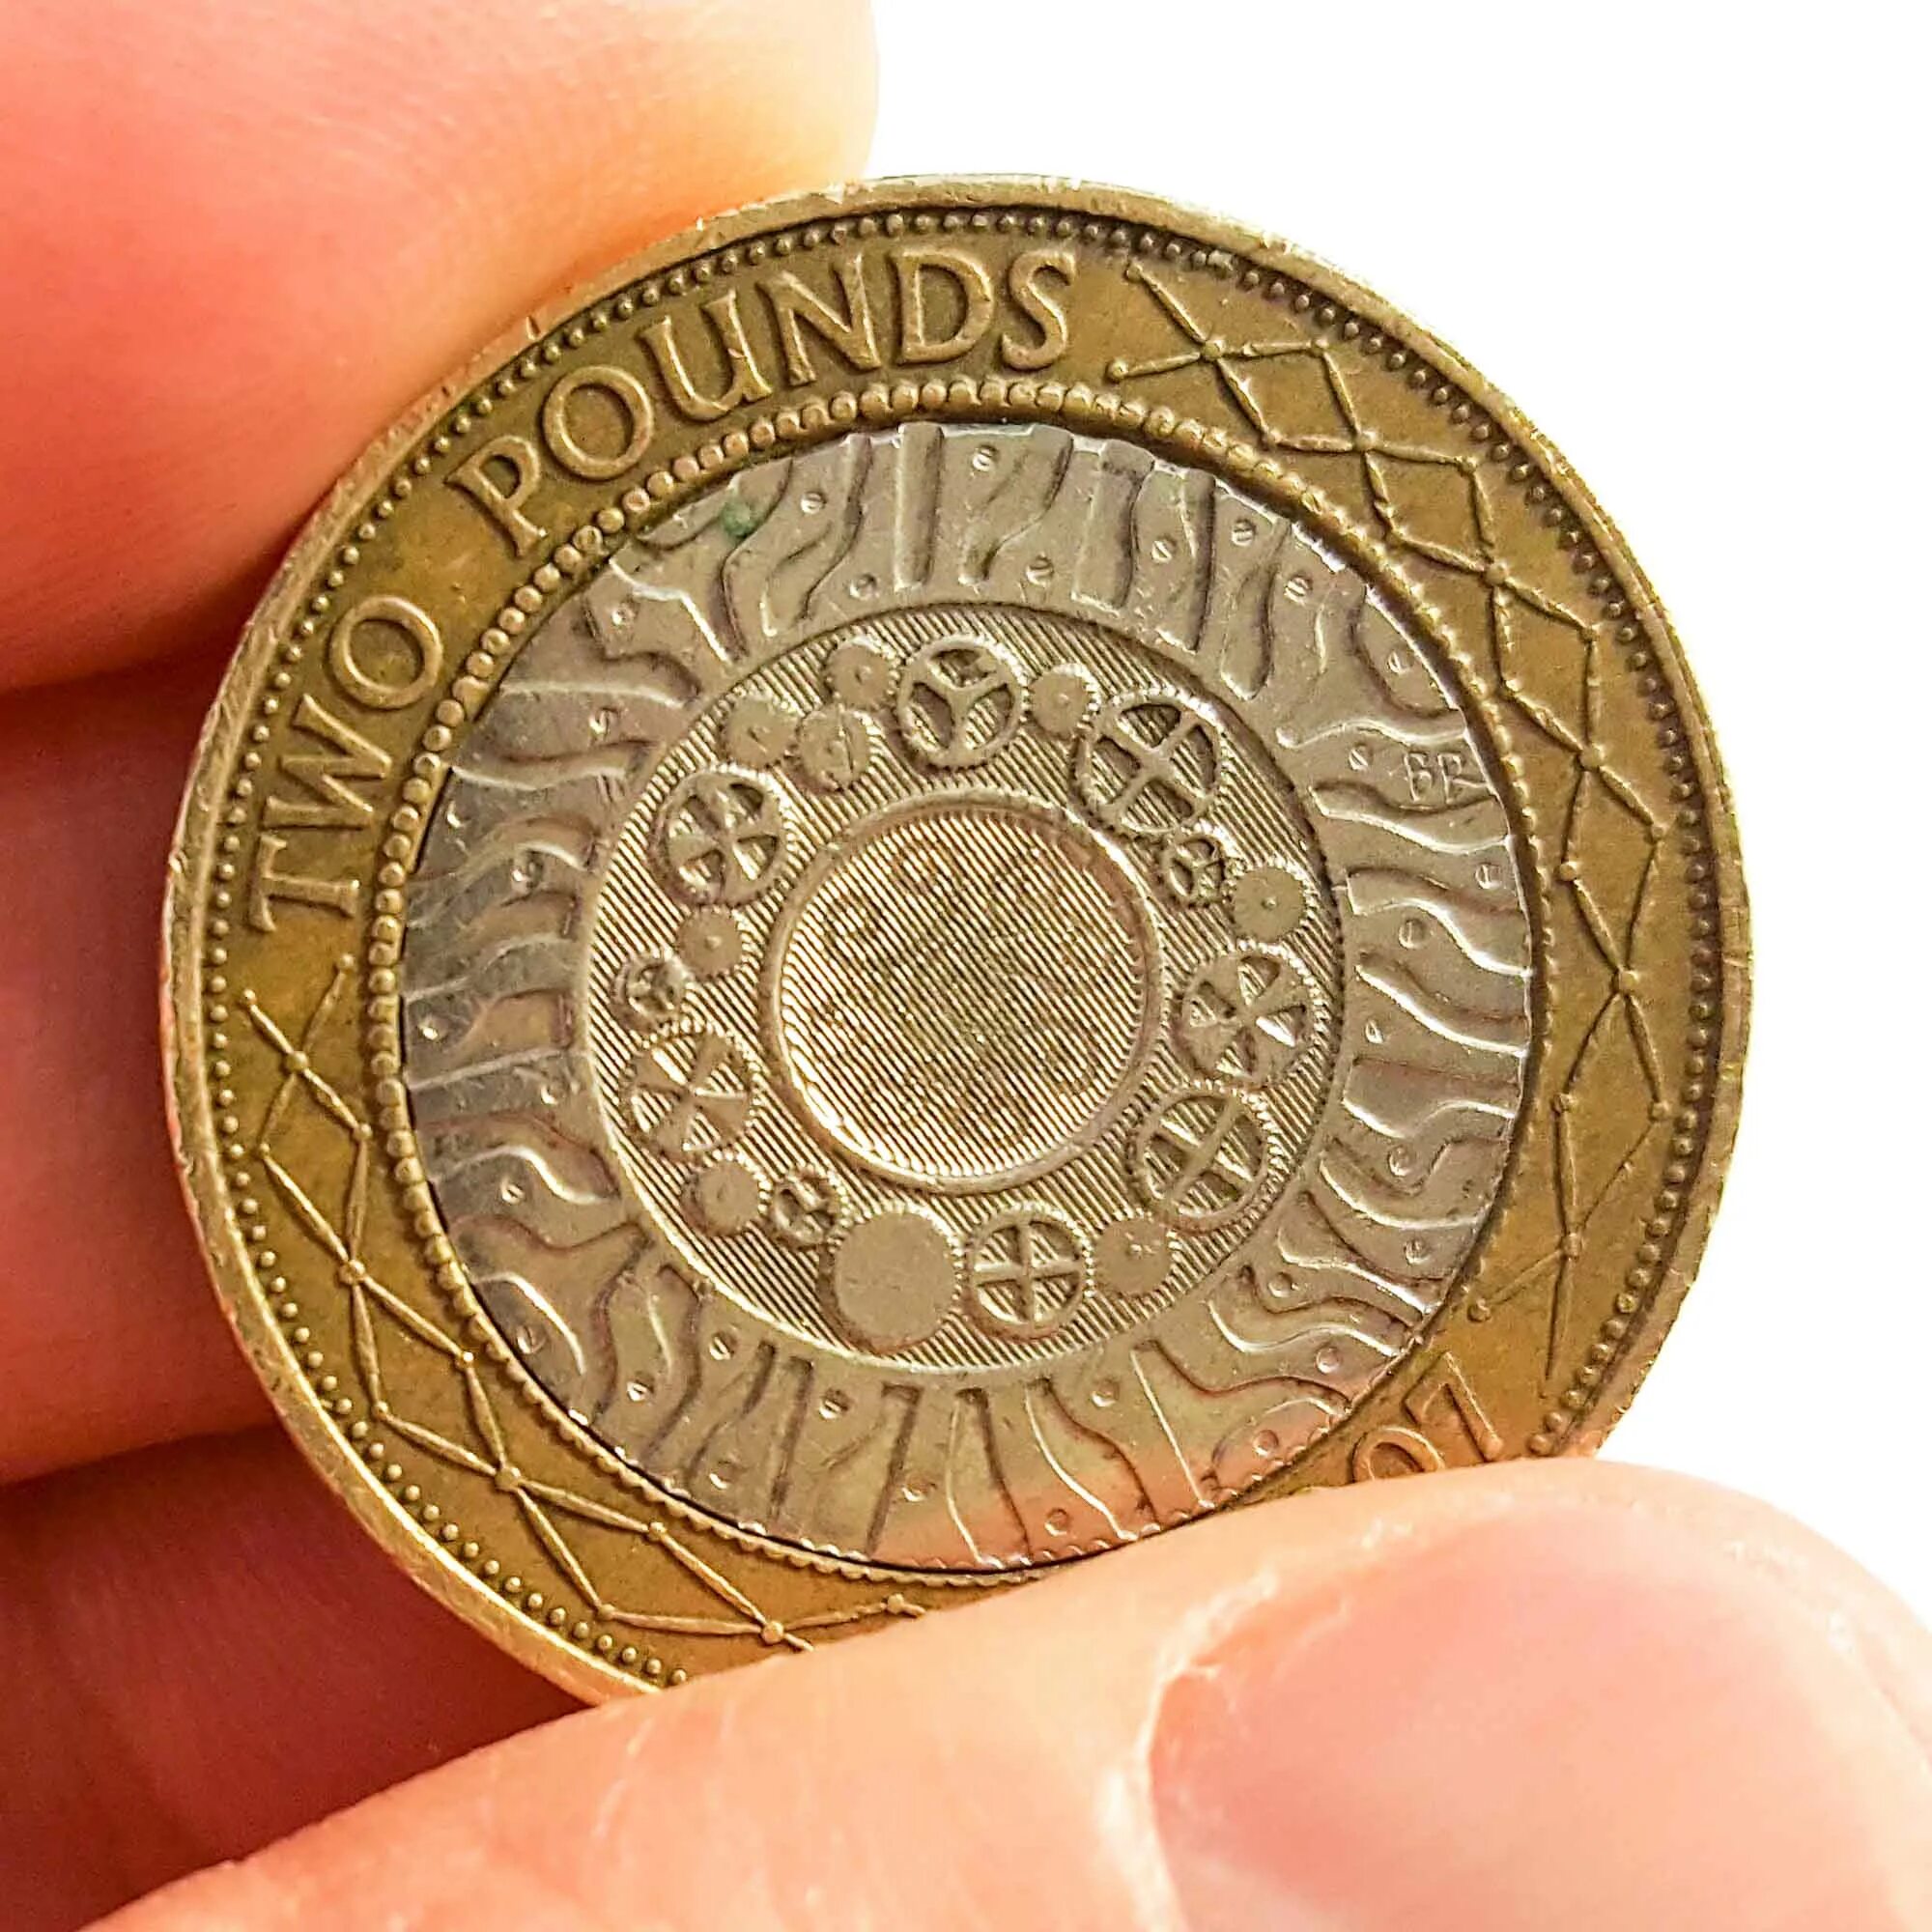 Two pounds монета. GST монета. Техника на монетах. Second Cup монета. Two coins